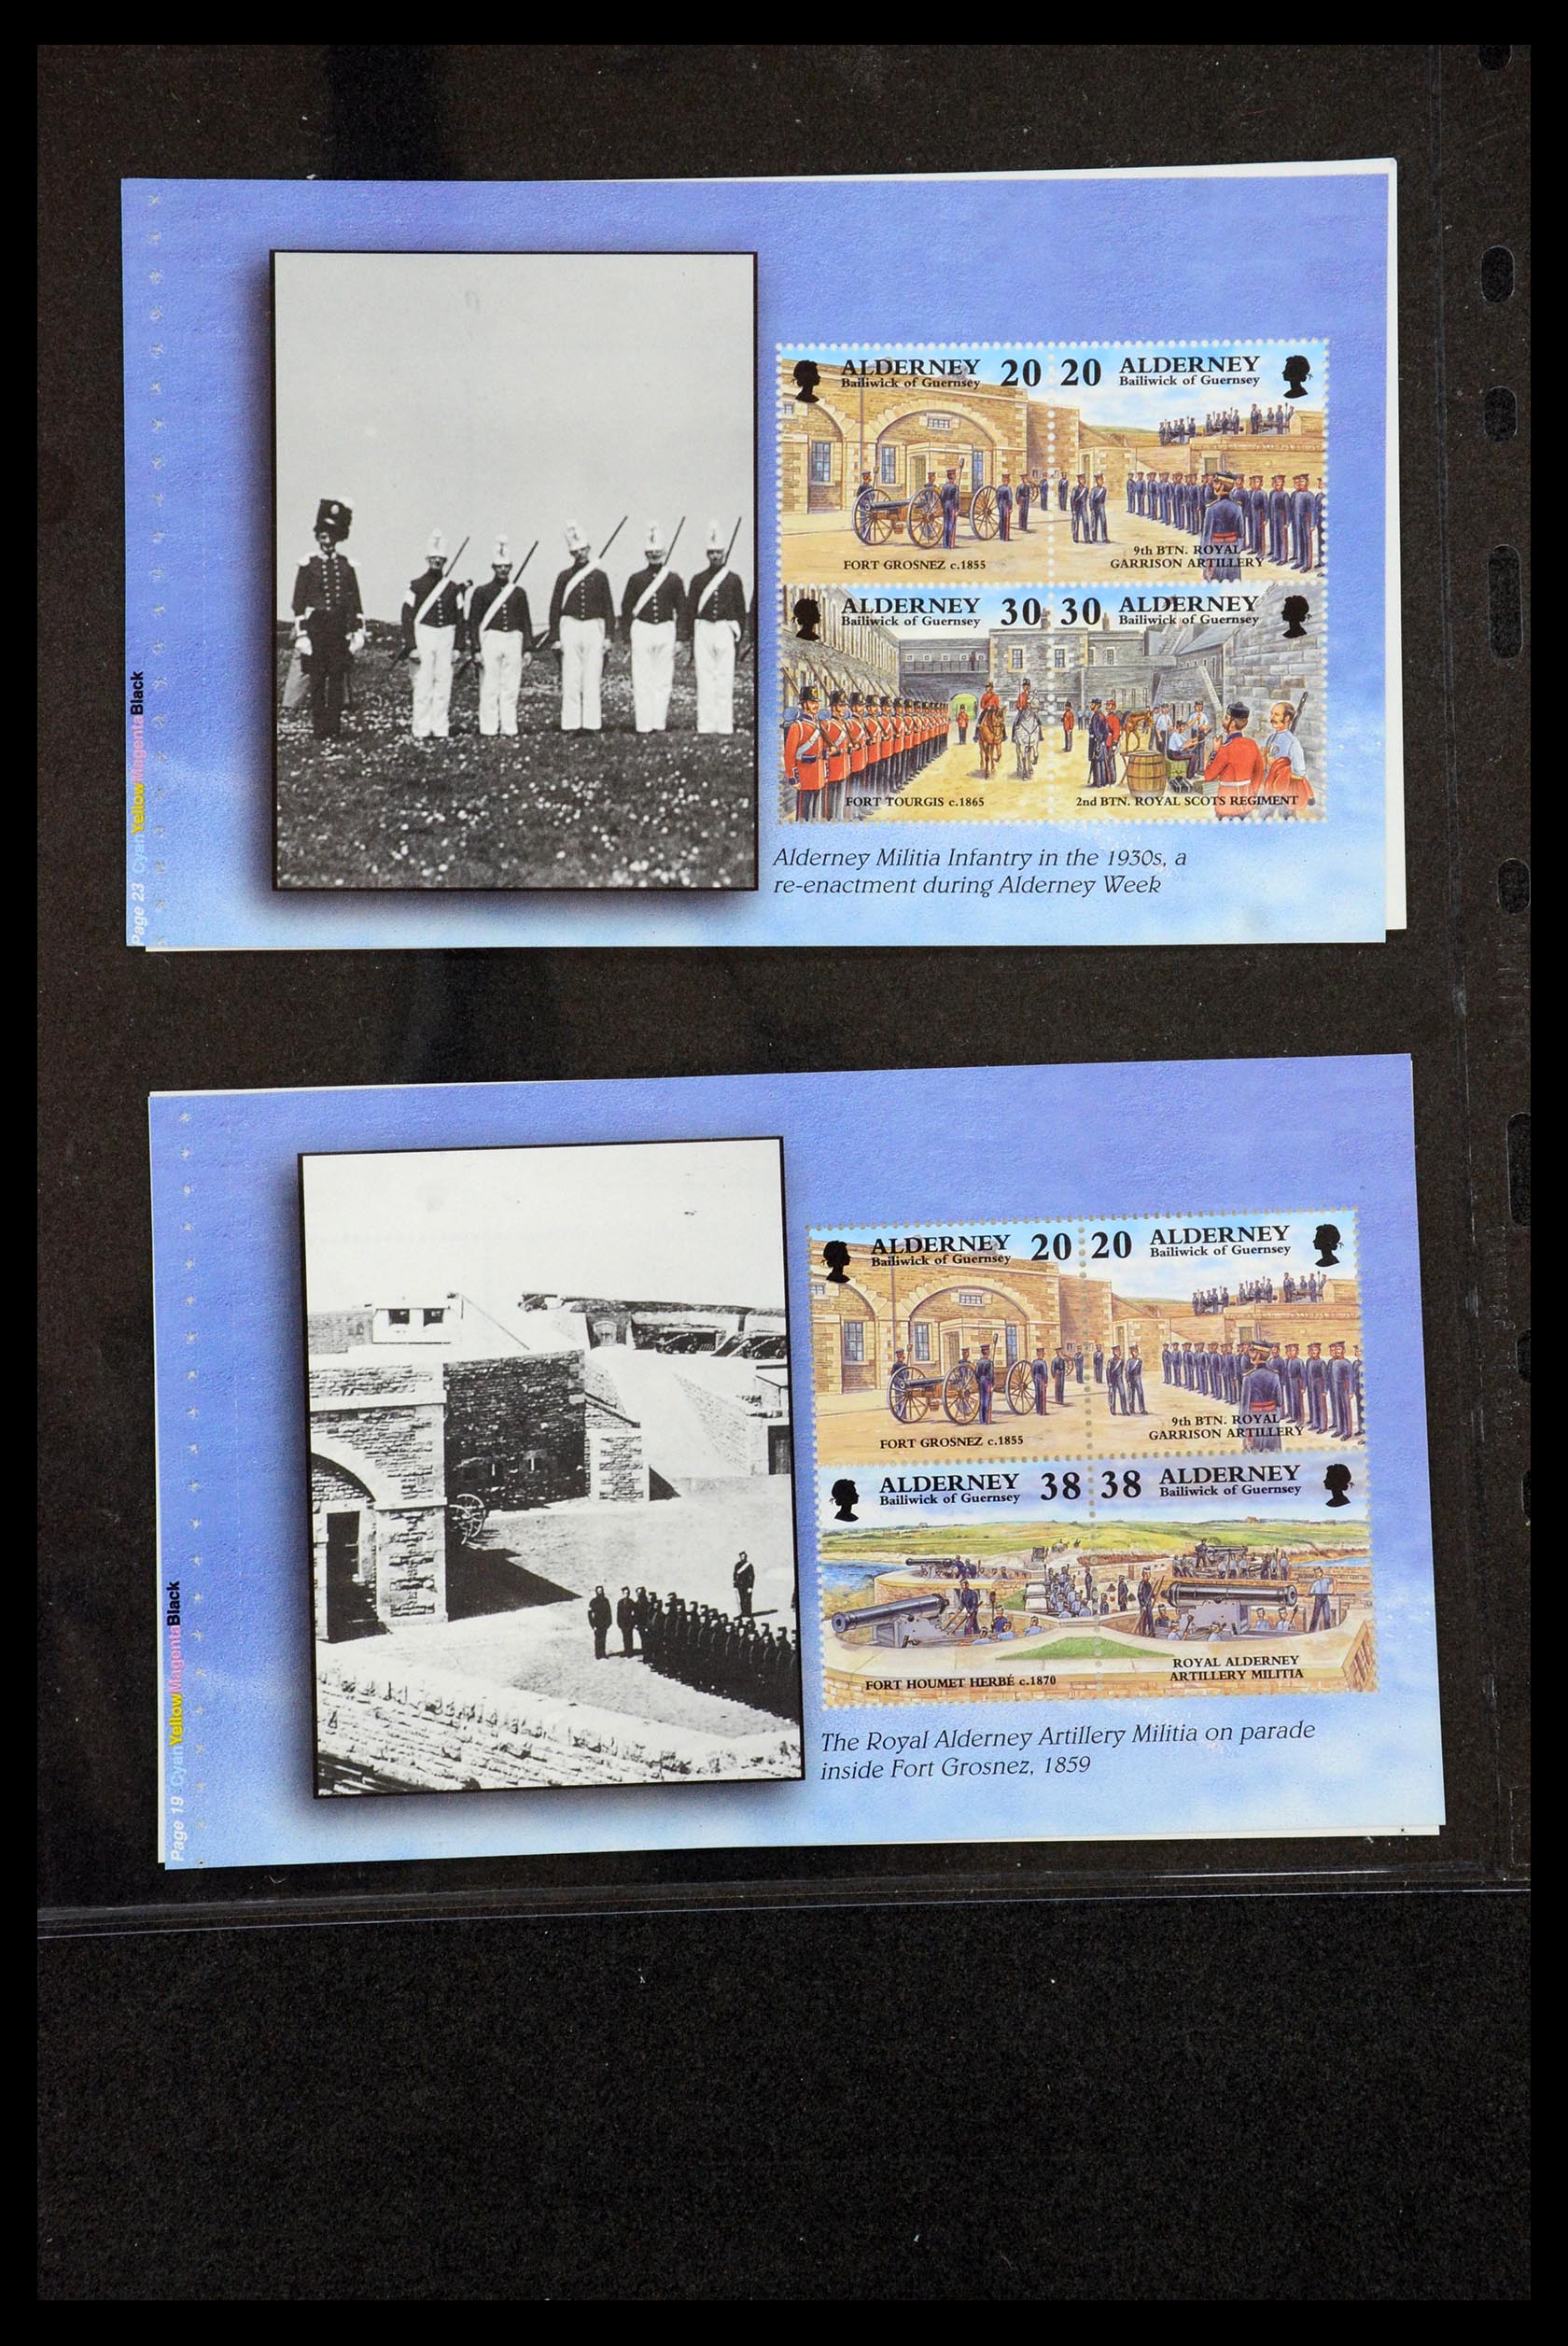 35976 023 - Stamp collection 35976 Guernsey and Alderney stamp booklets 1969-2015!